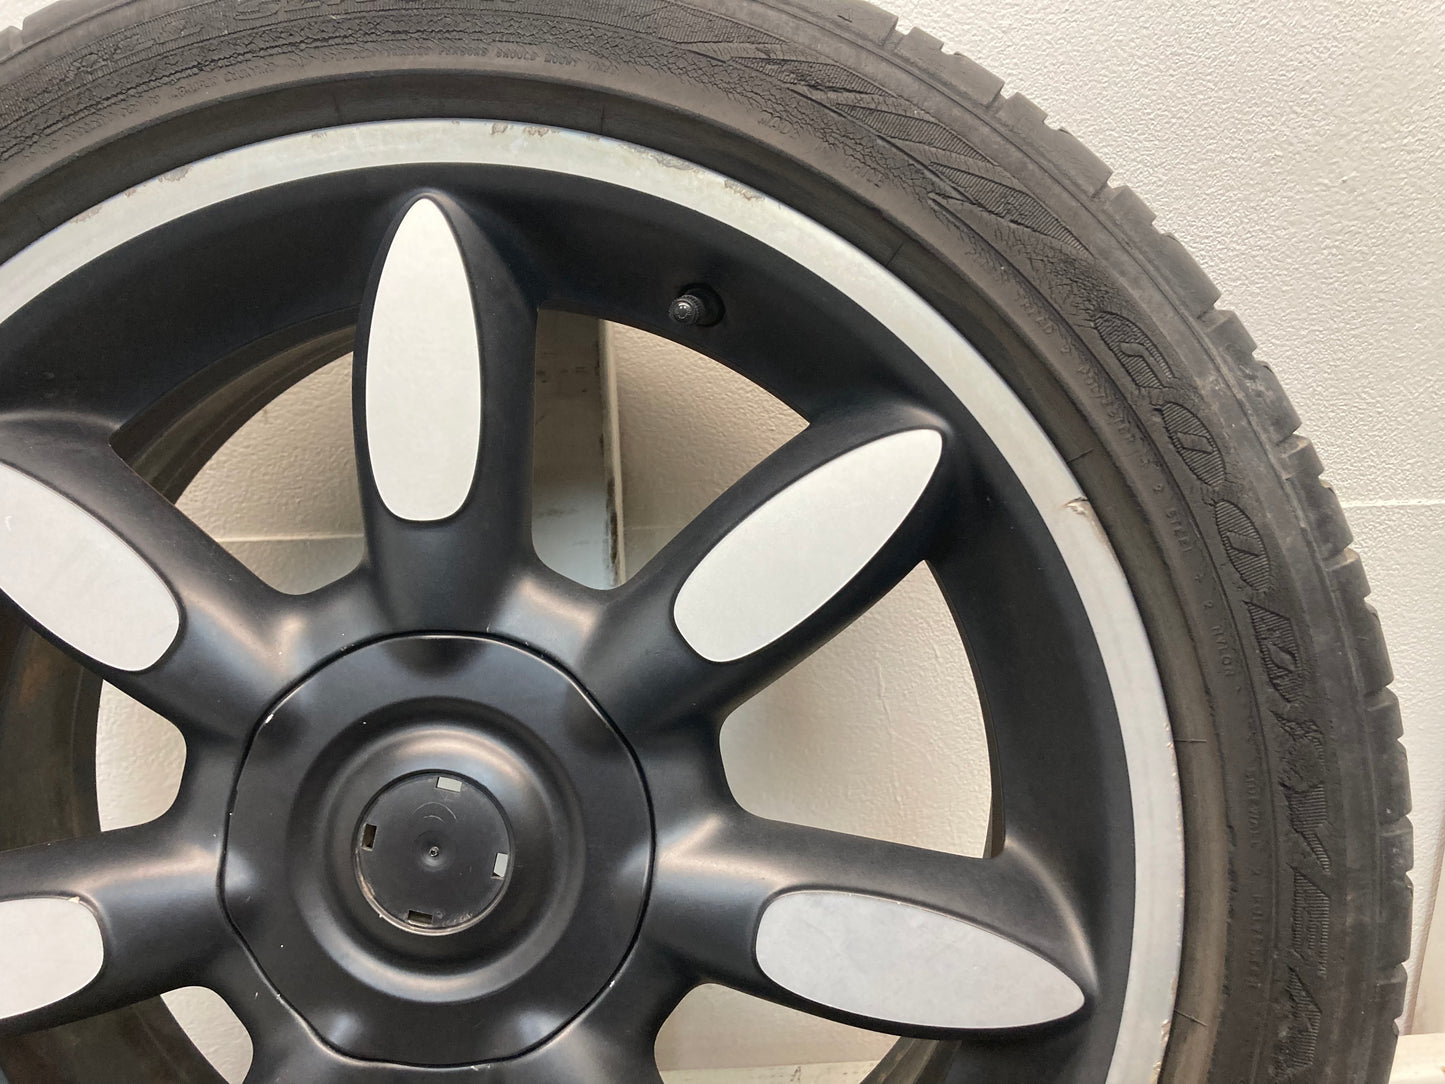 Mini Cooper S Sidewalk Edition Wheel Set 36116773800 02-15 413